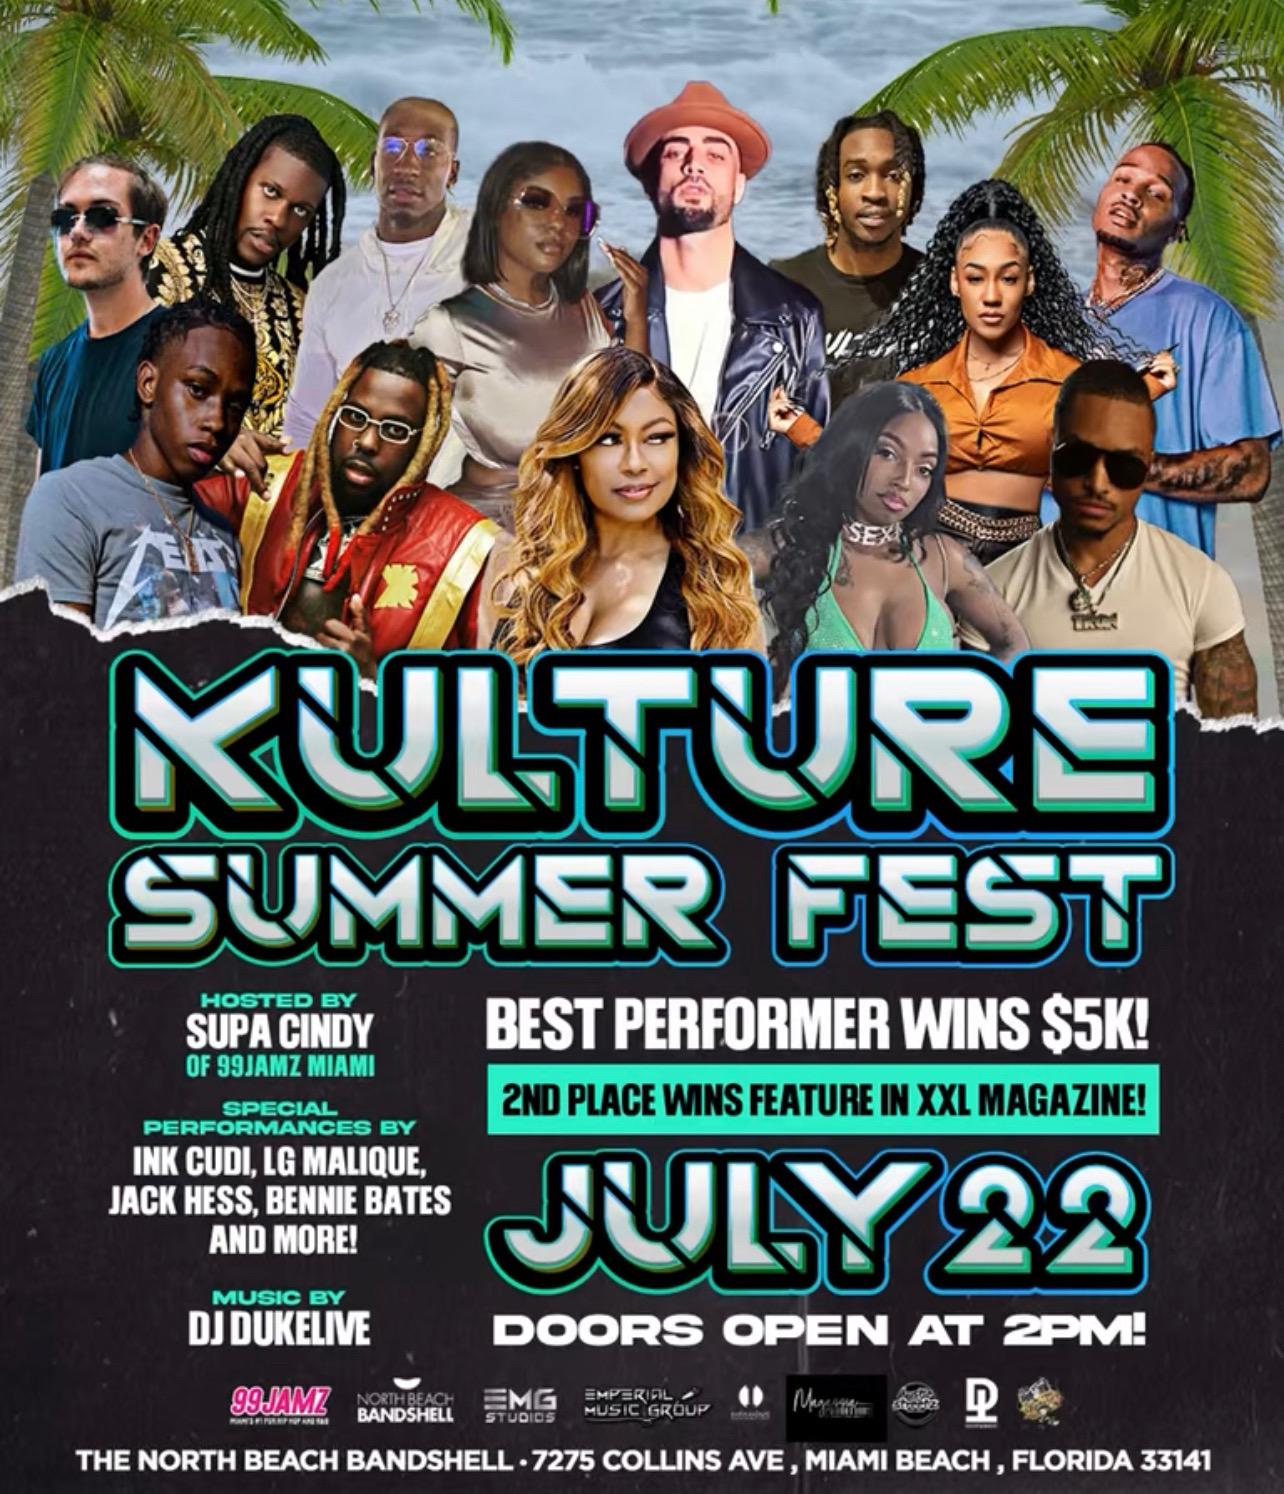 Kulture Summer Fest 2022